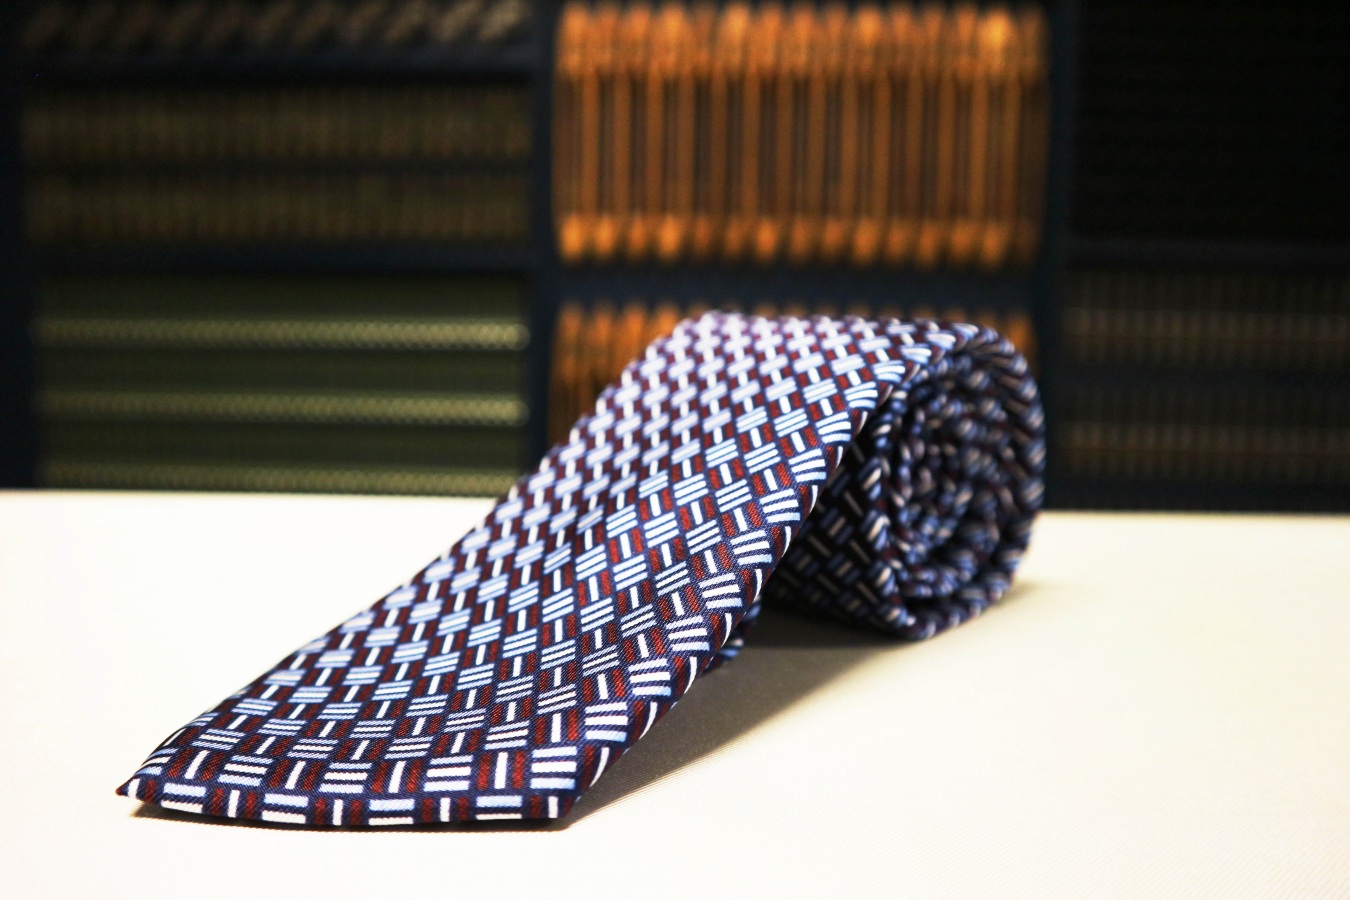 Cravatta in seta, fantasia geometrica